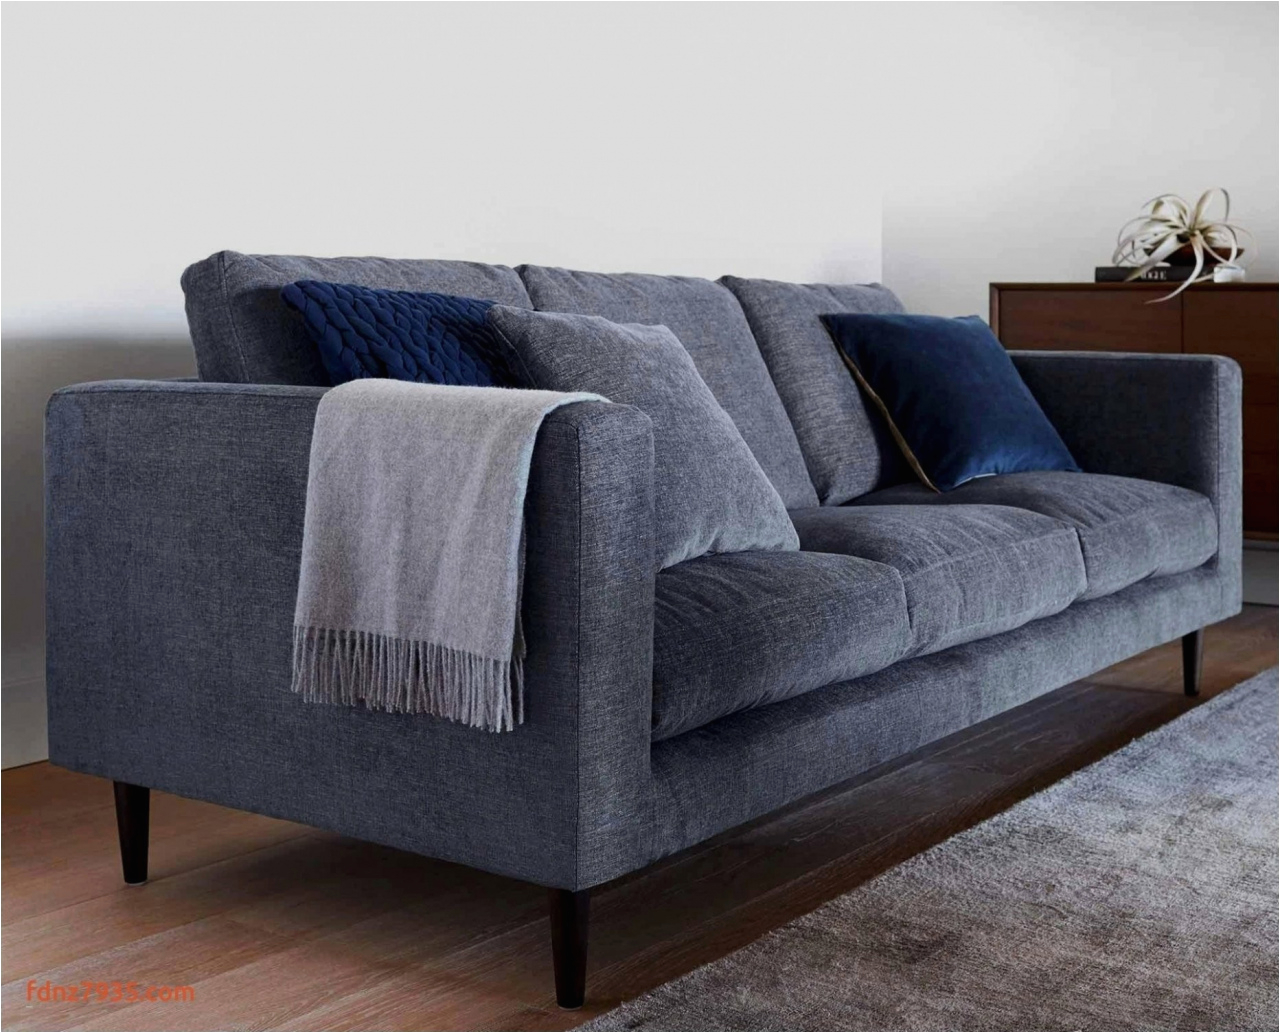 sofa couch bed 15 elegant das sofa bilder rfhn durch sofa couch bed